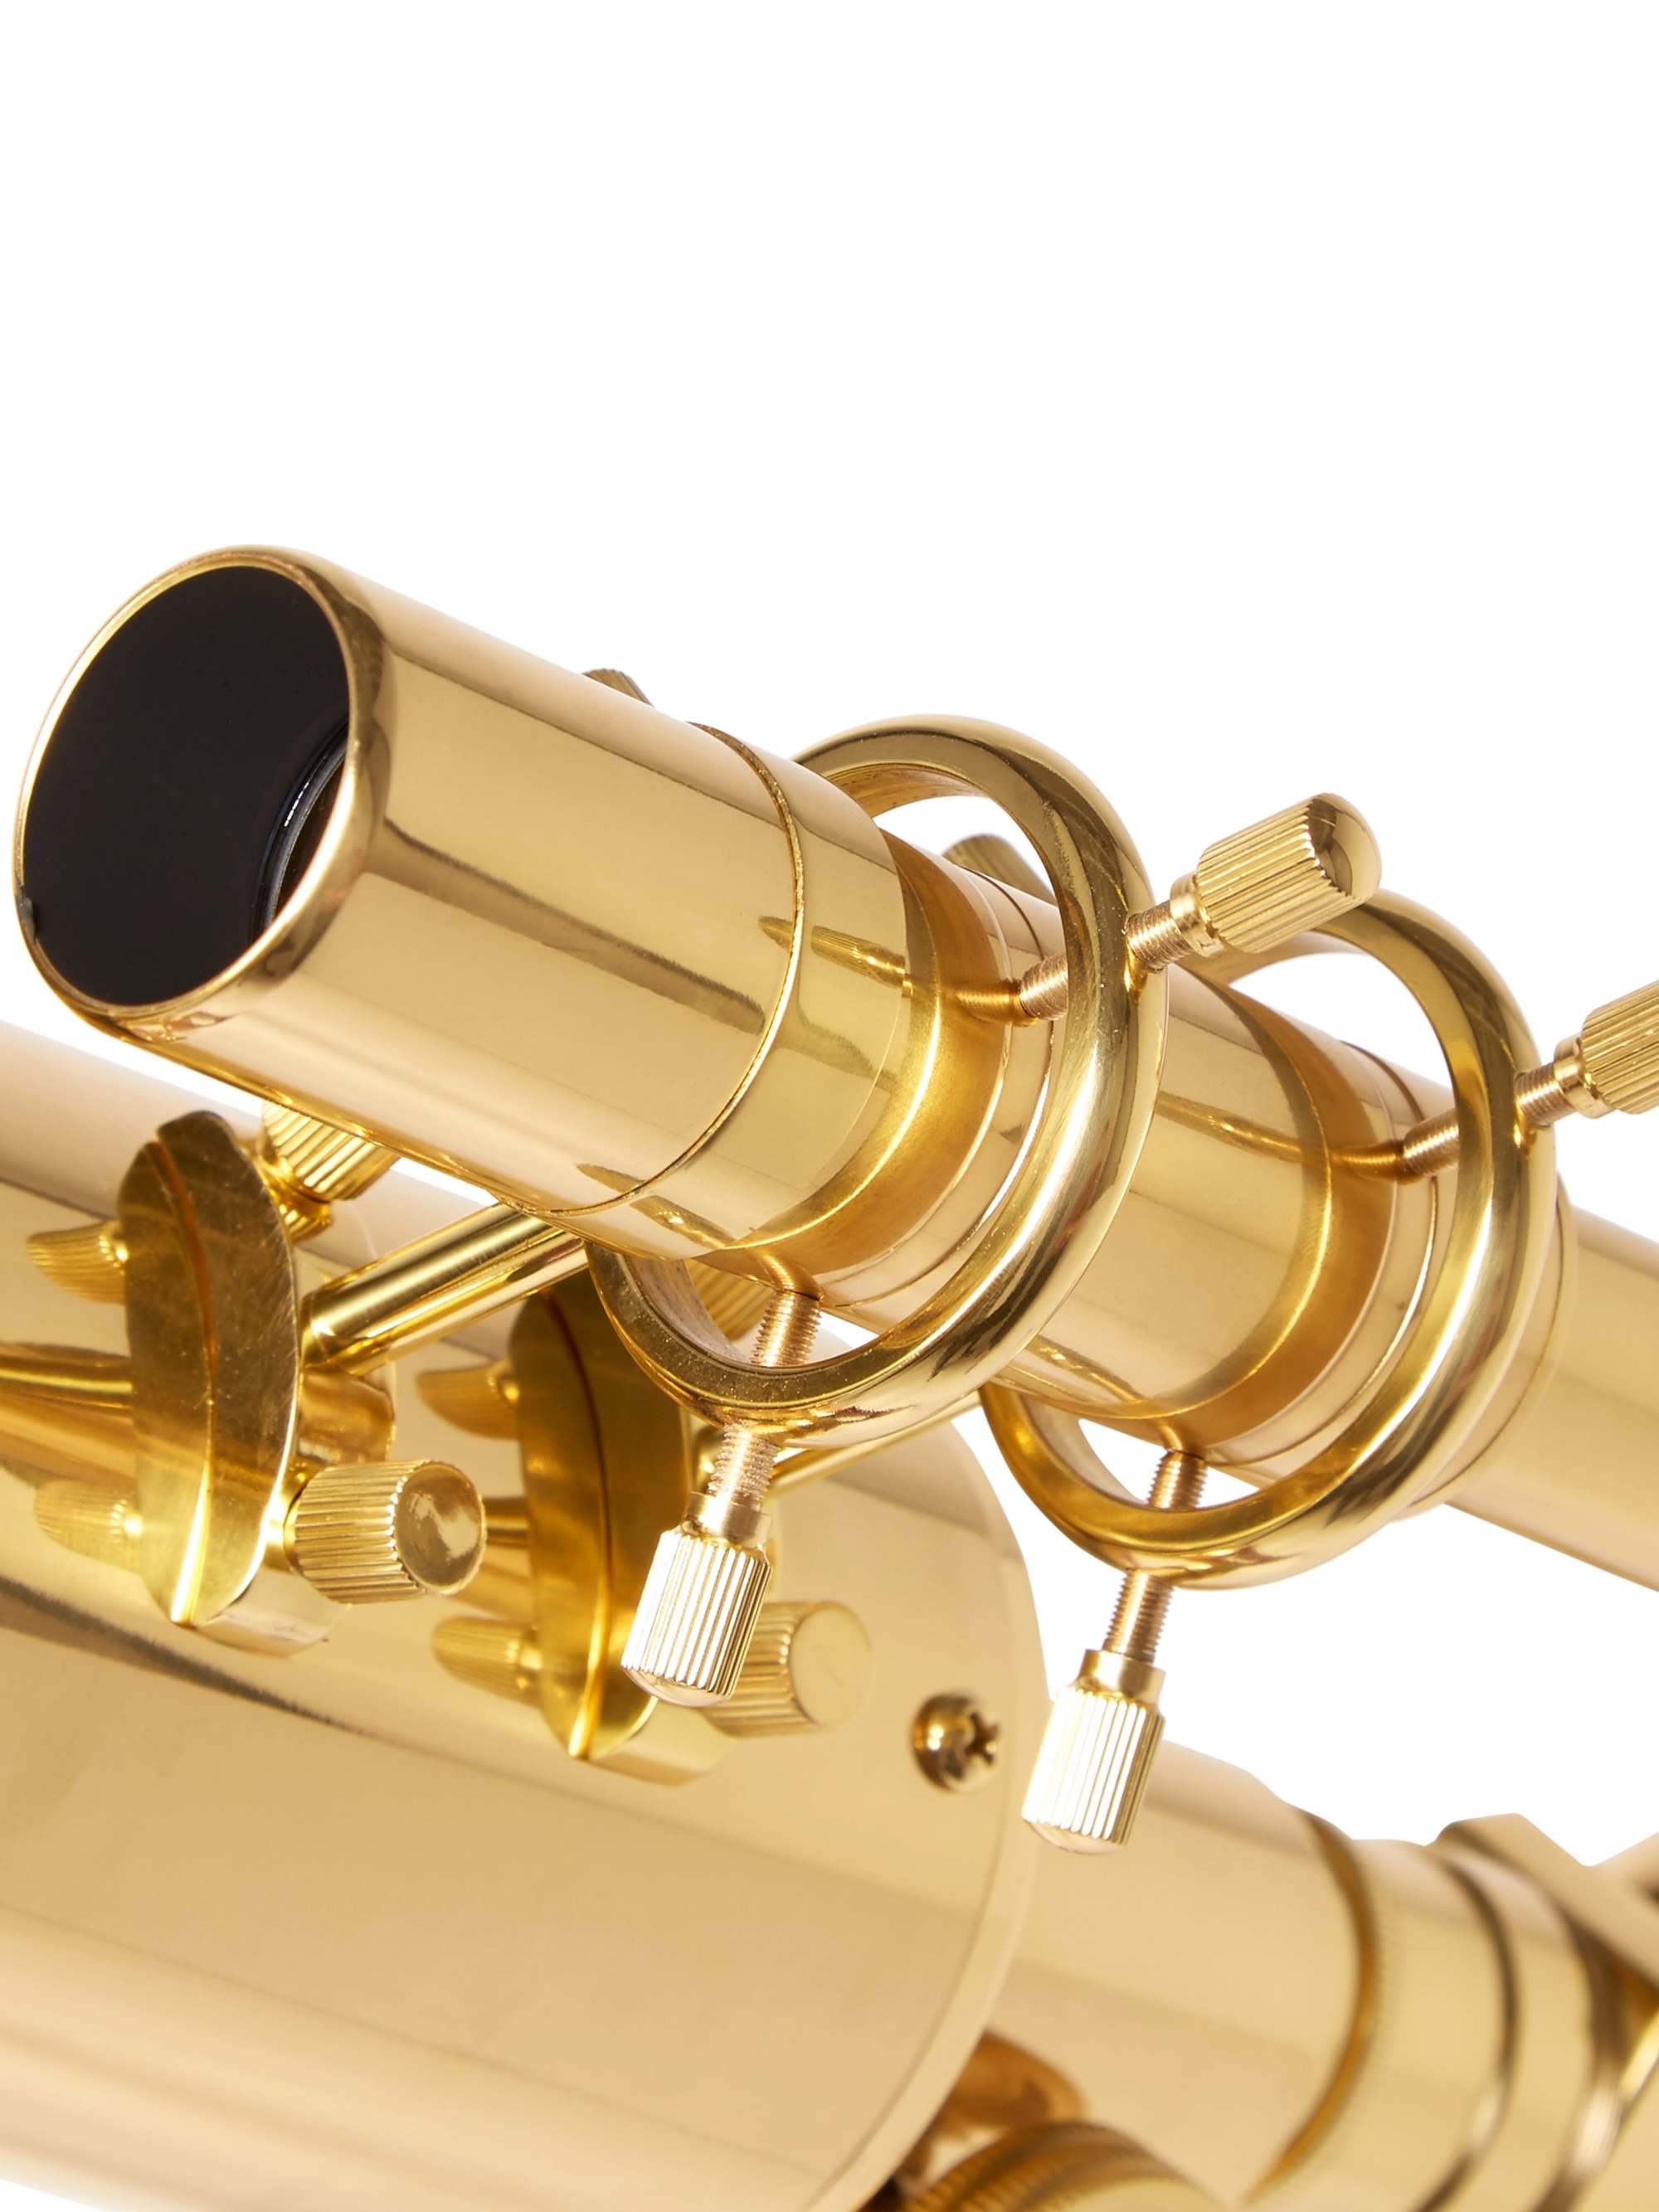 CELESTRON Ambassador 80mm Brass and Mahogany Telescope